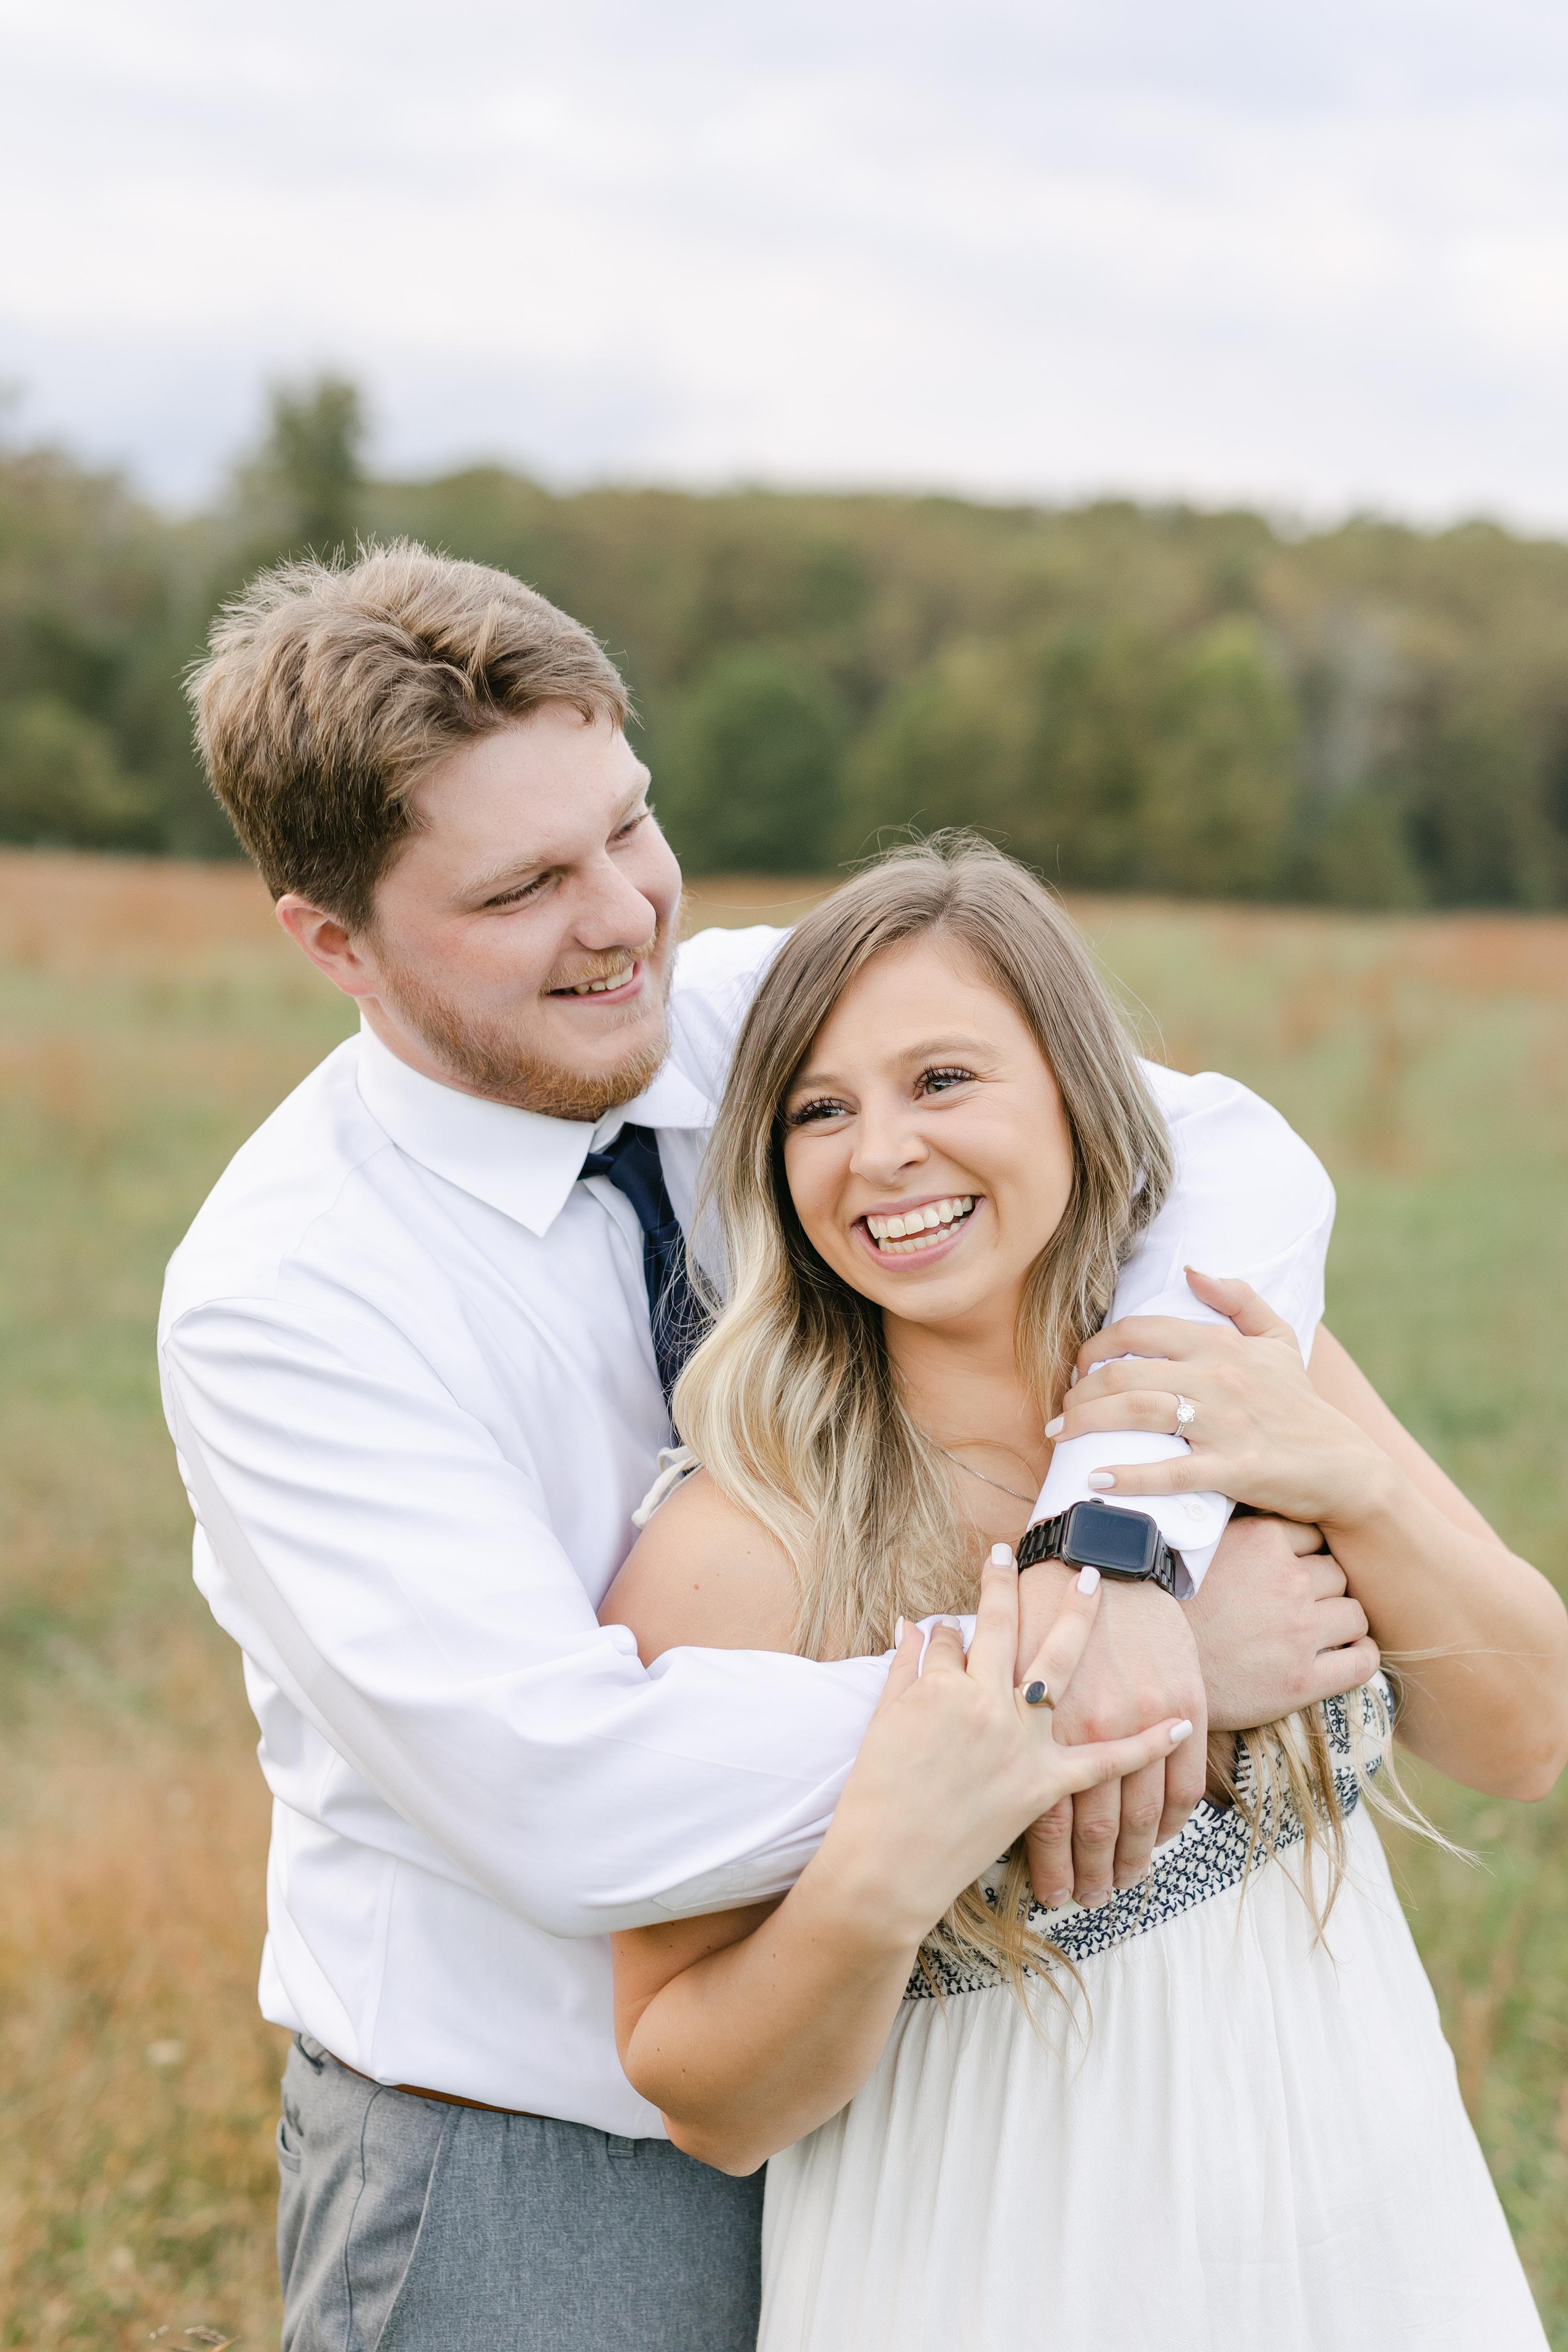 The Wedding Website of Madison Schutz and Christian Scott